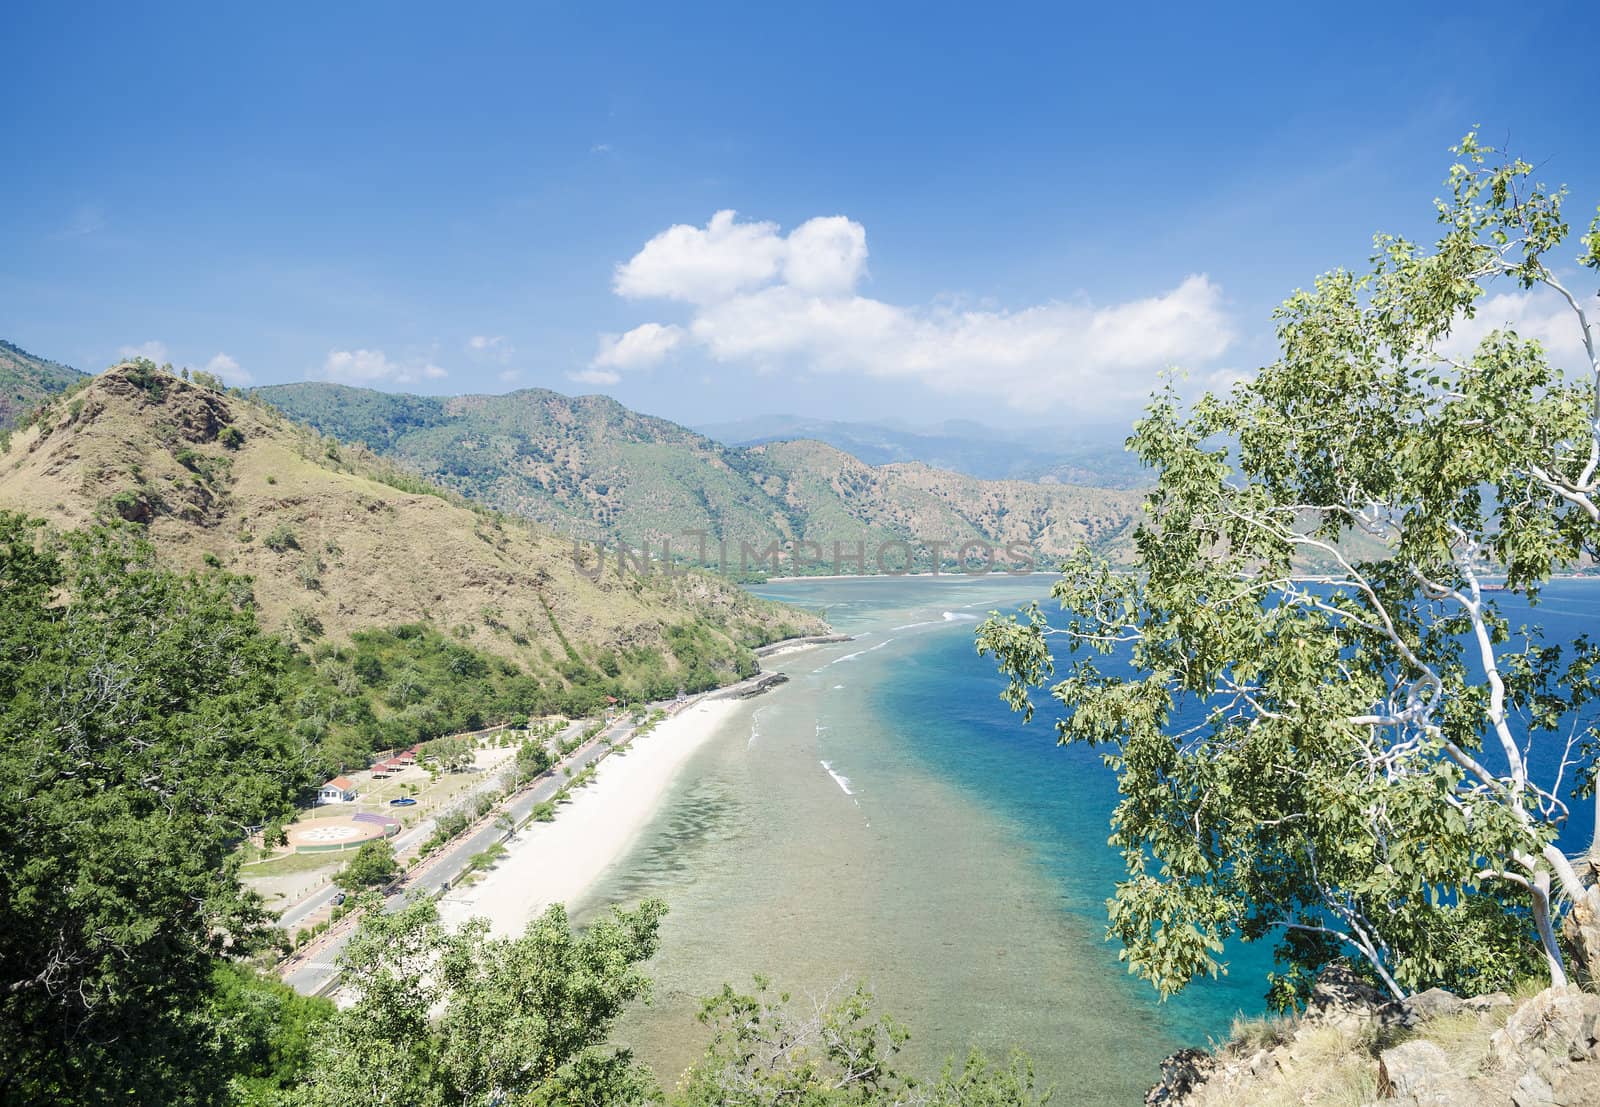 beach and coast near dili in east timor by jackmalipan